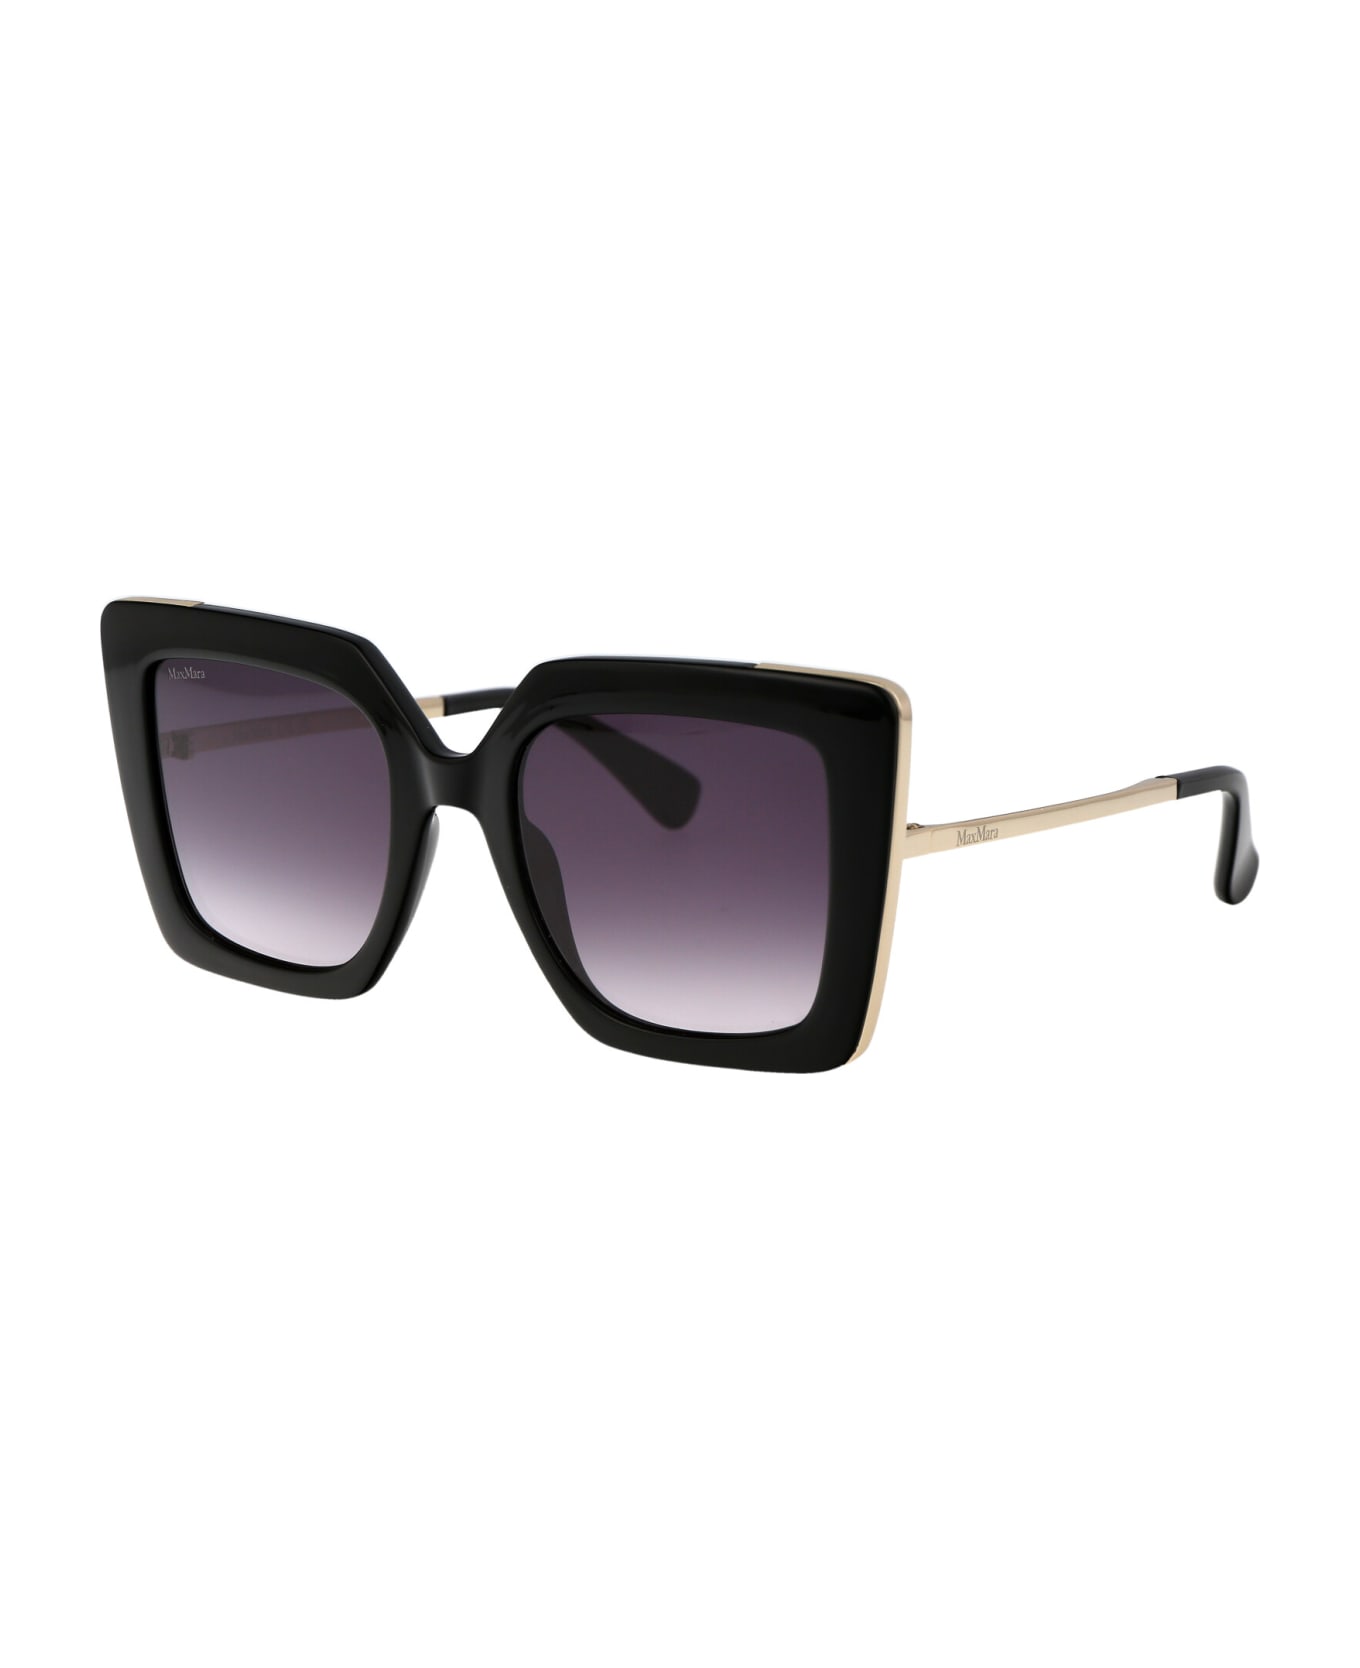 Max Mara Design4 Sunglasses - 01B Nero Lucido/Fumo Grad サングラス